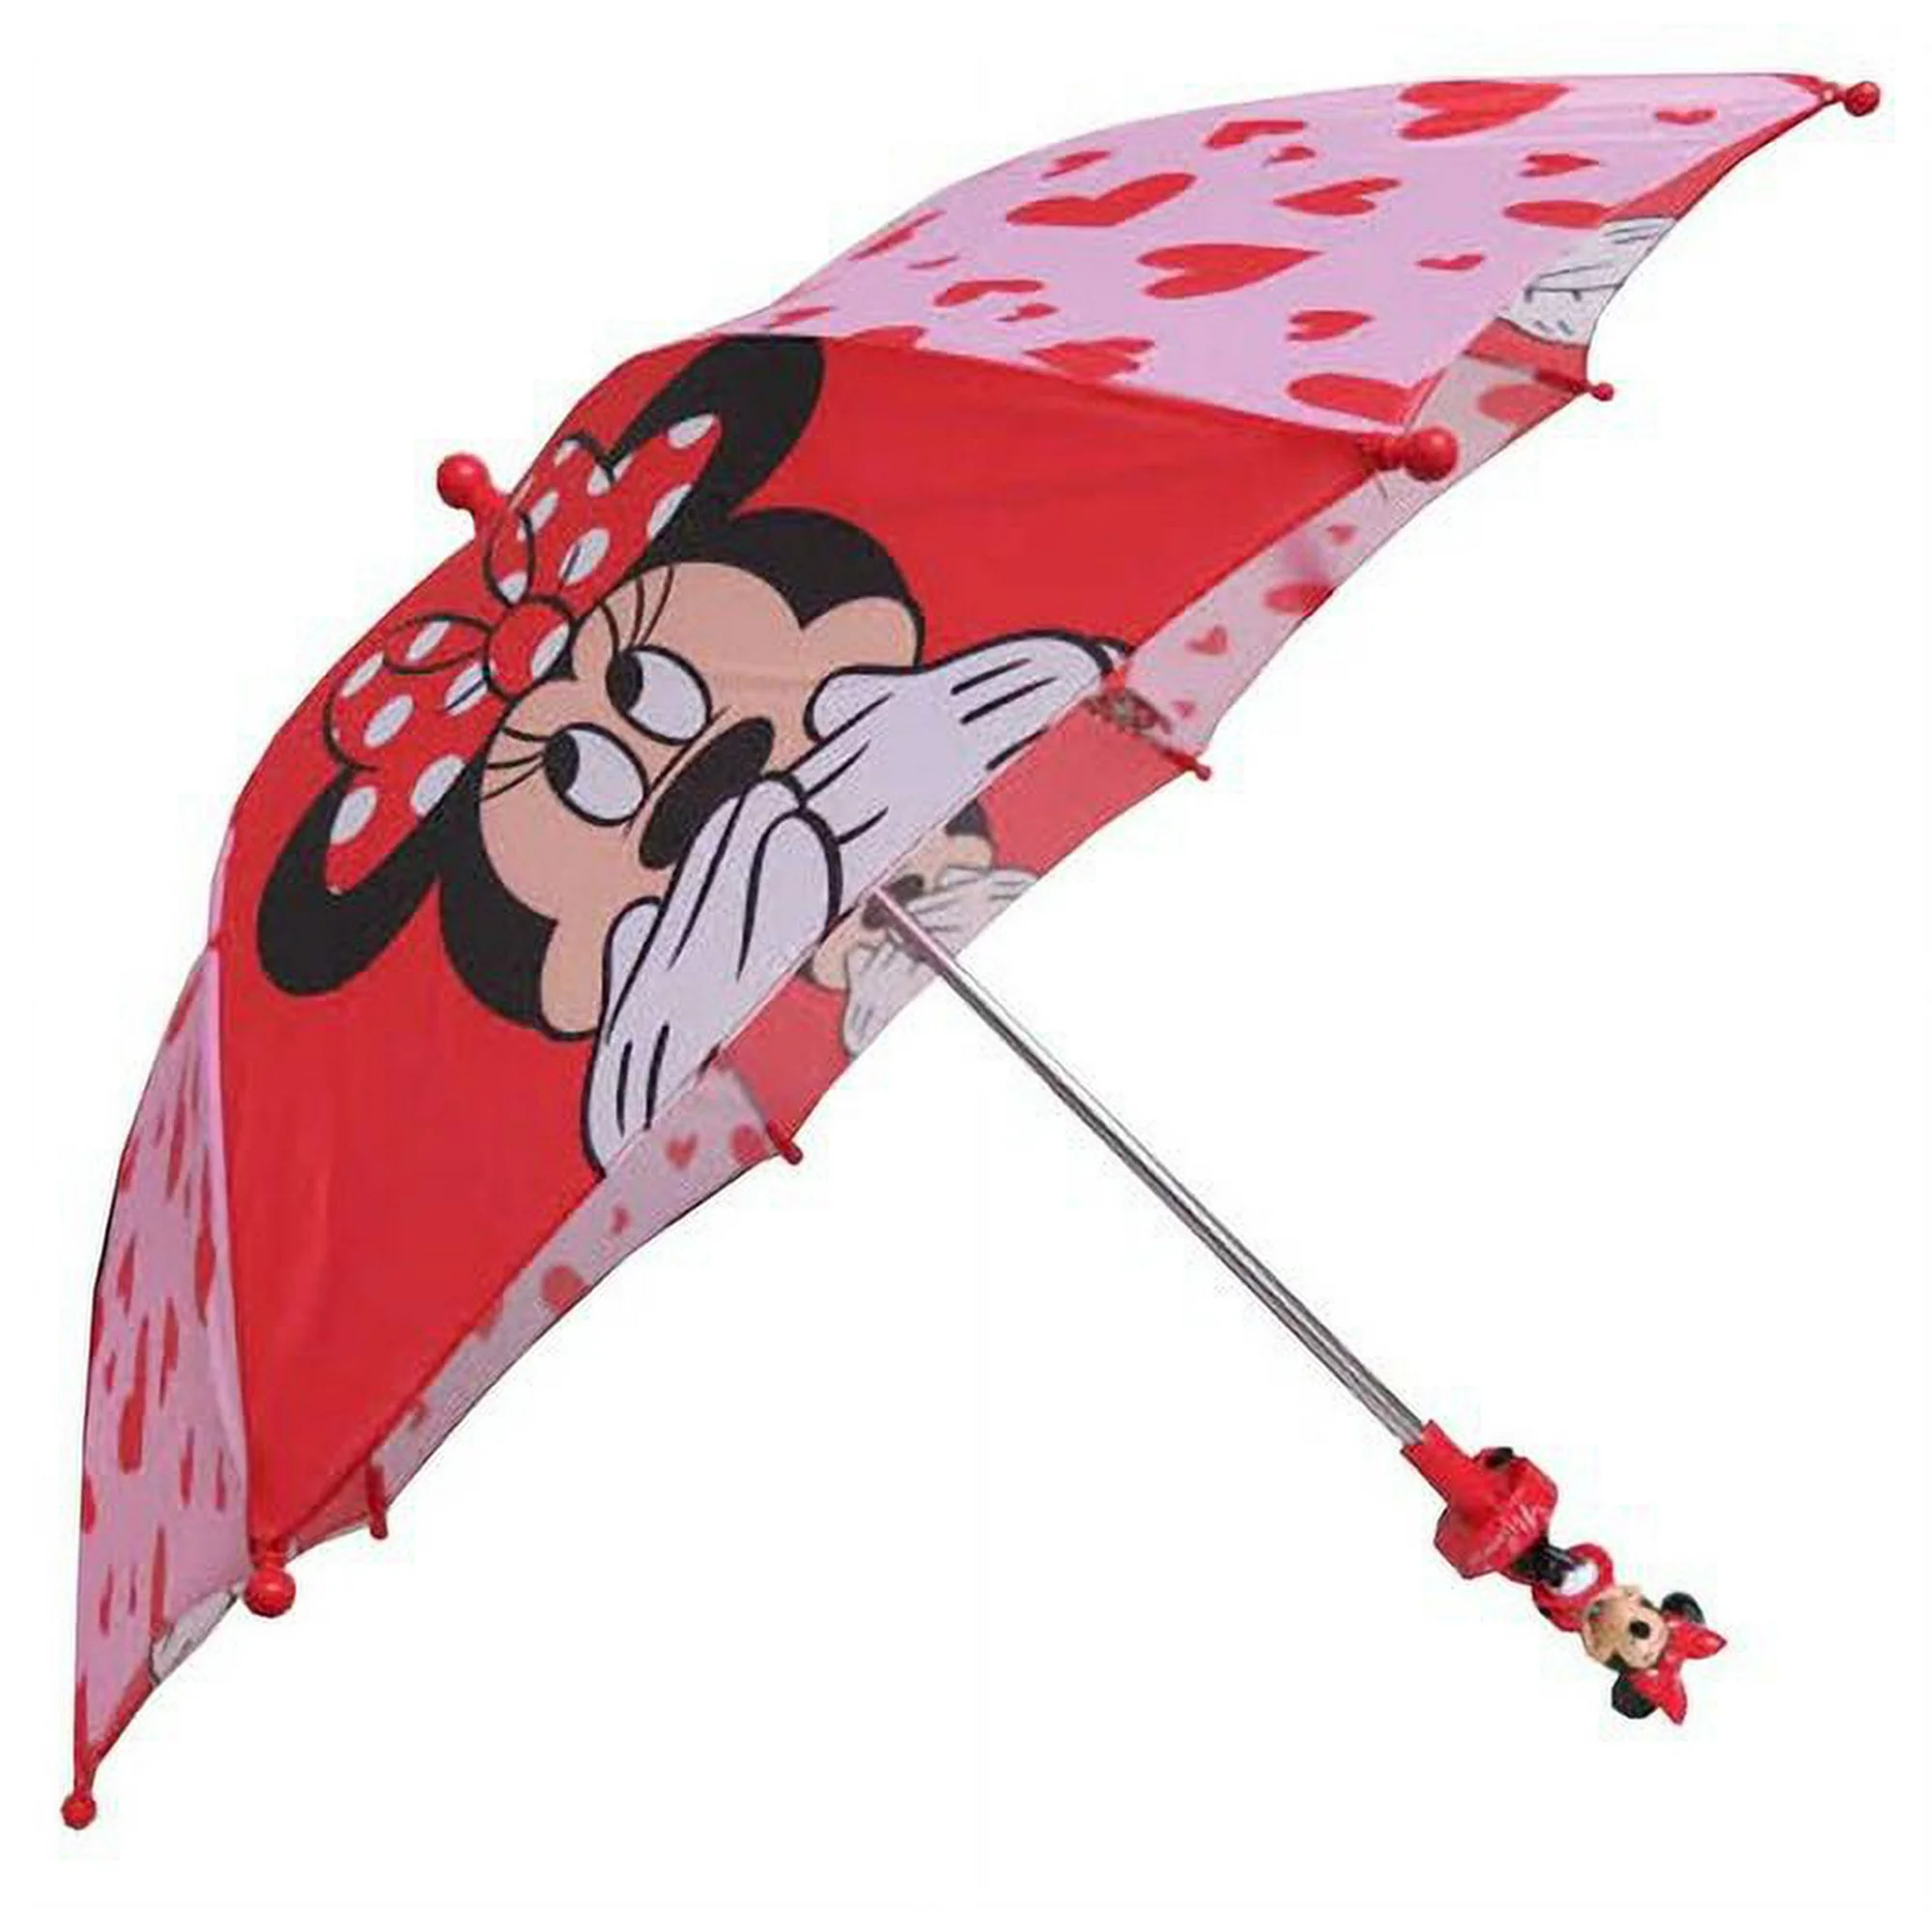 Minnie Mouse Girls' Umbrella - $10.00